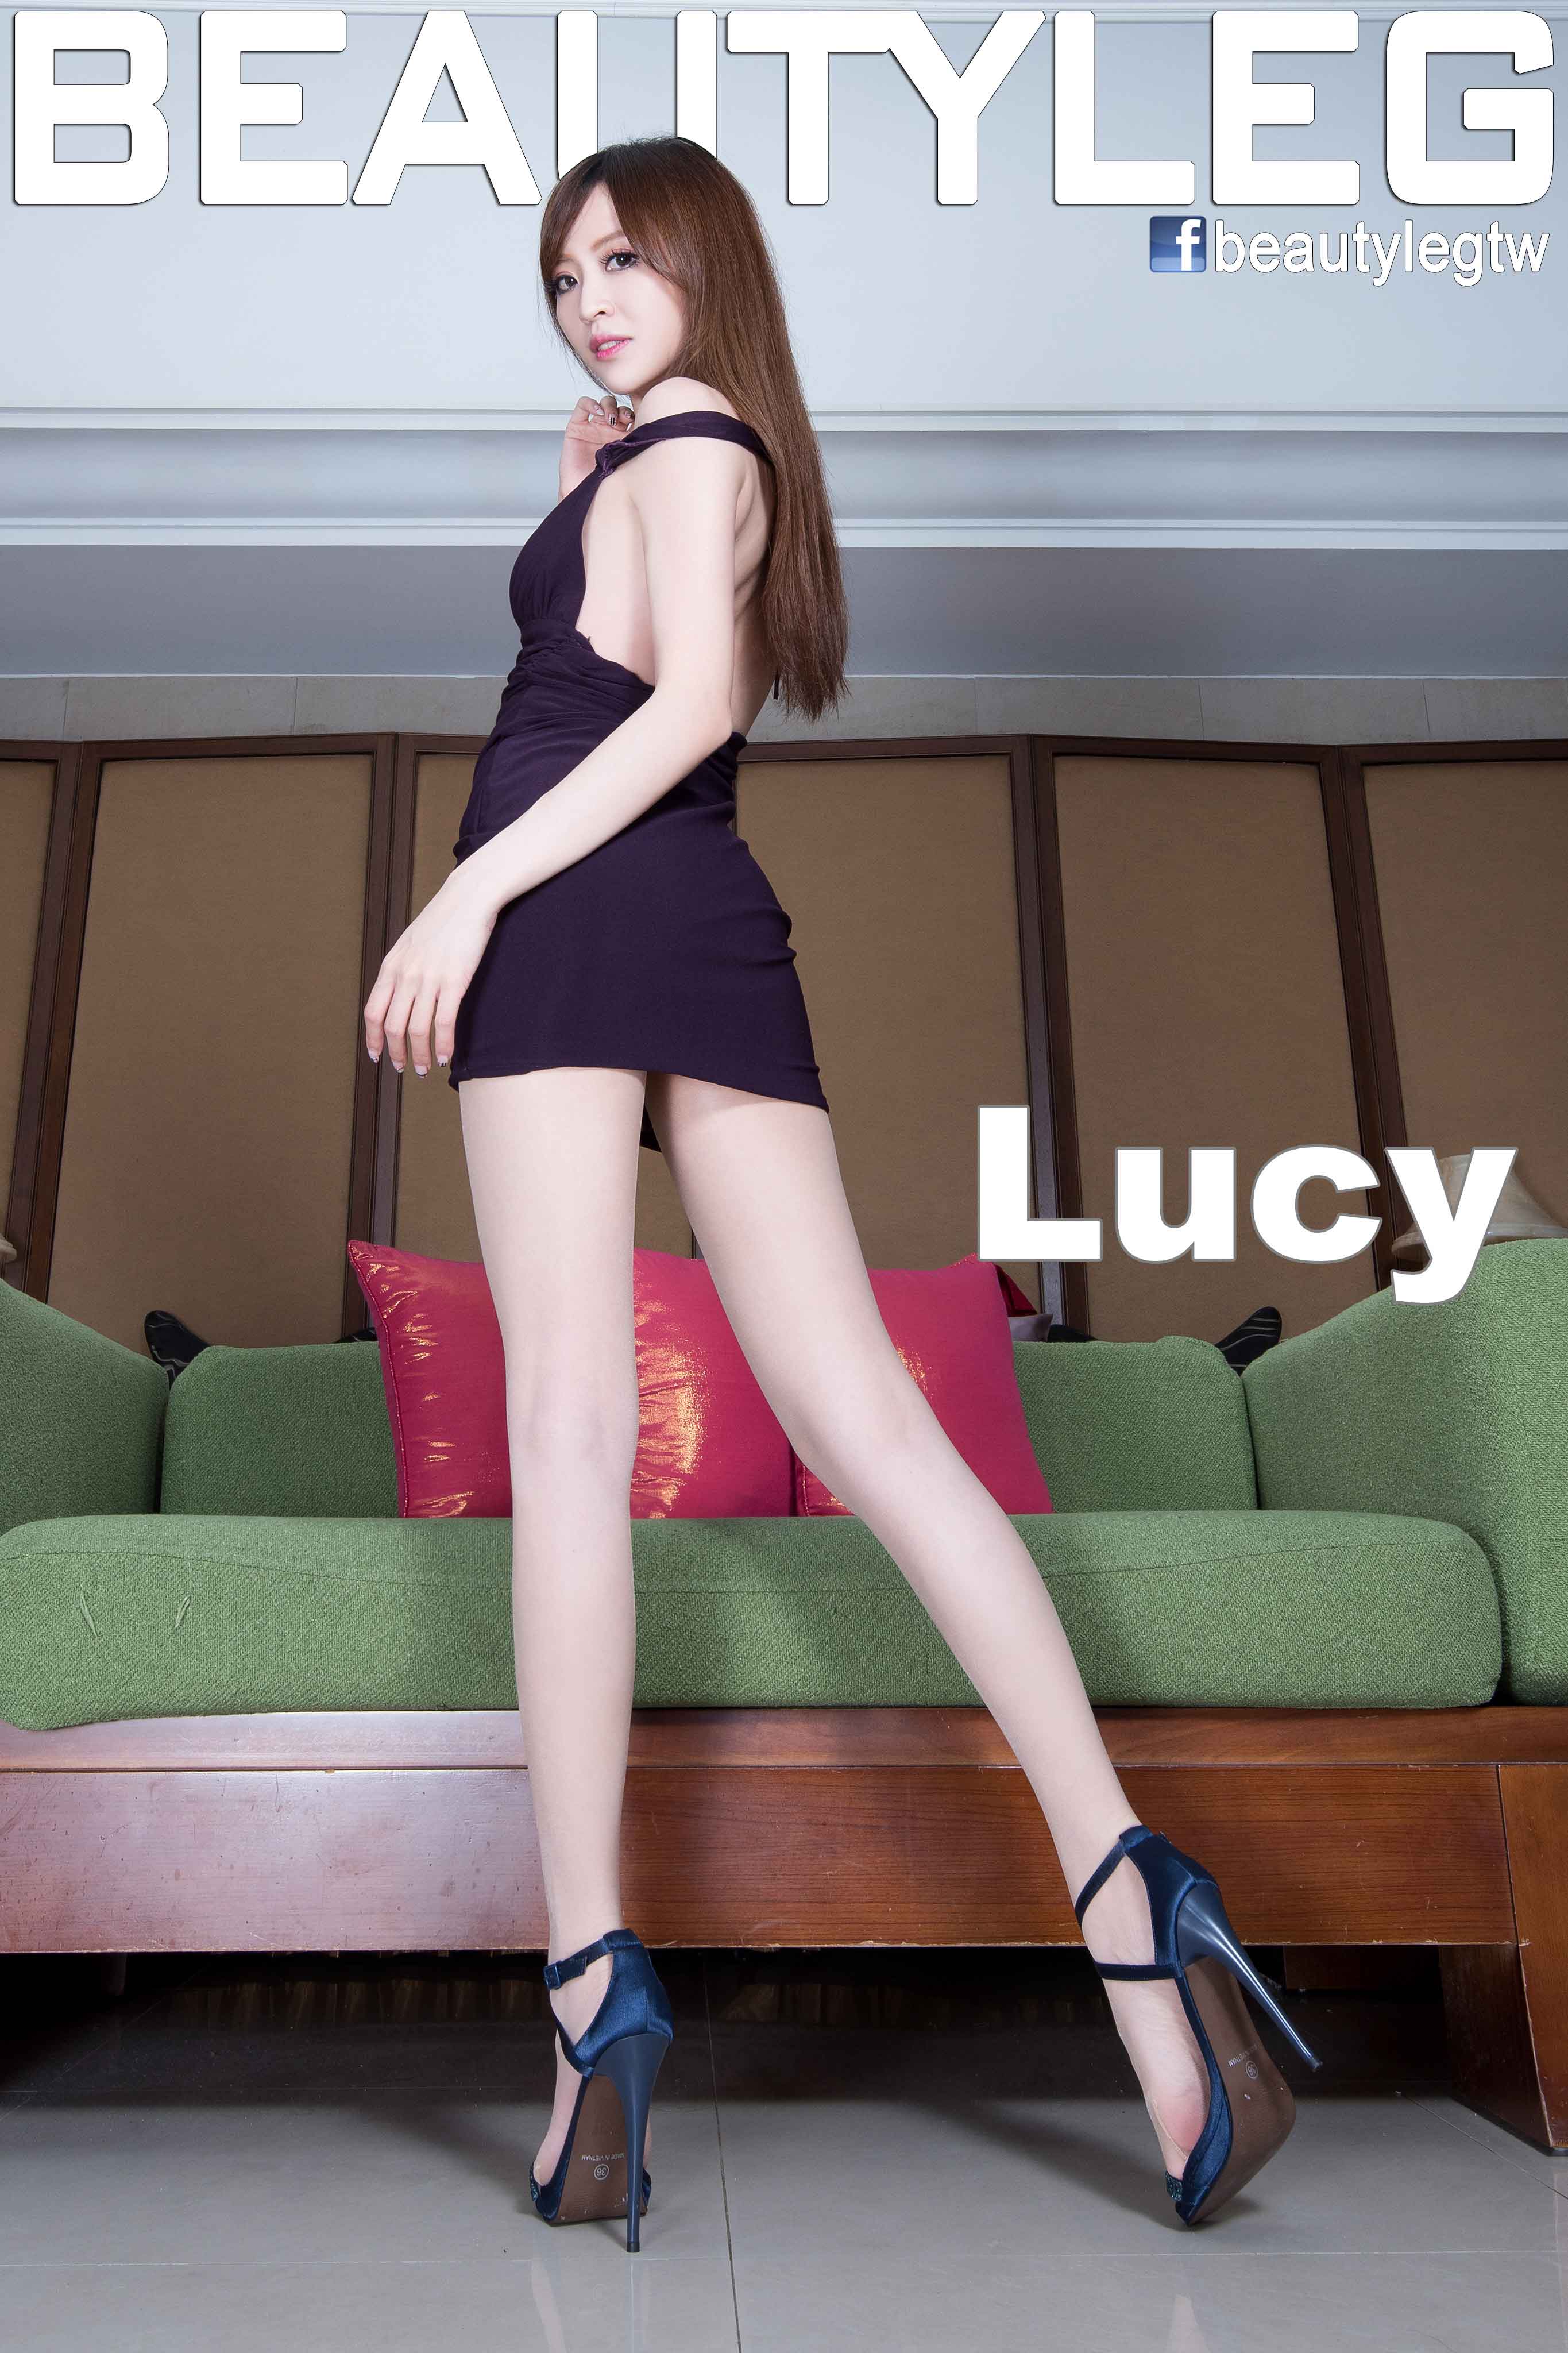 [Beautyleg] 美腿寫真 No.1097 Lucy 2015.02.19 [38P]